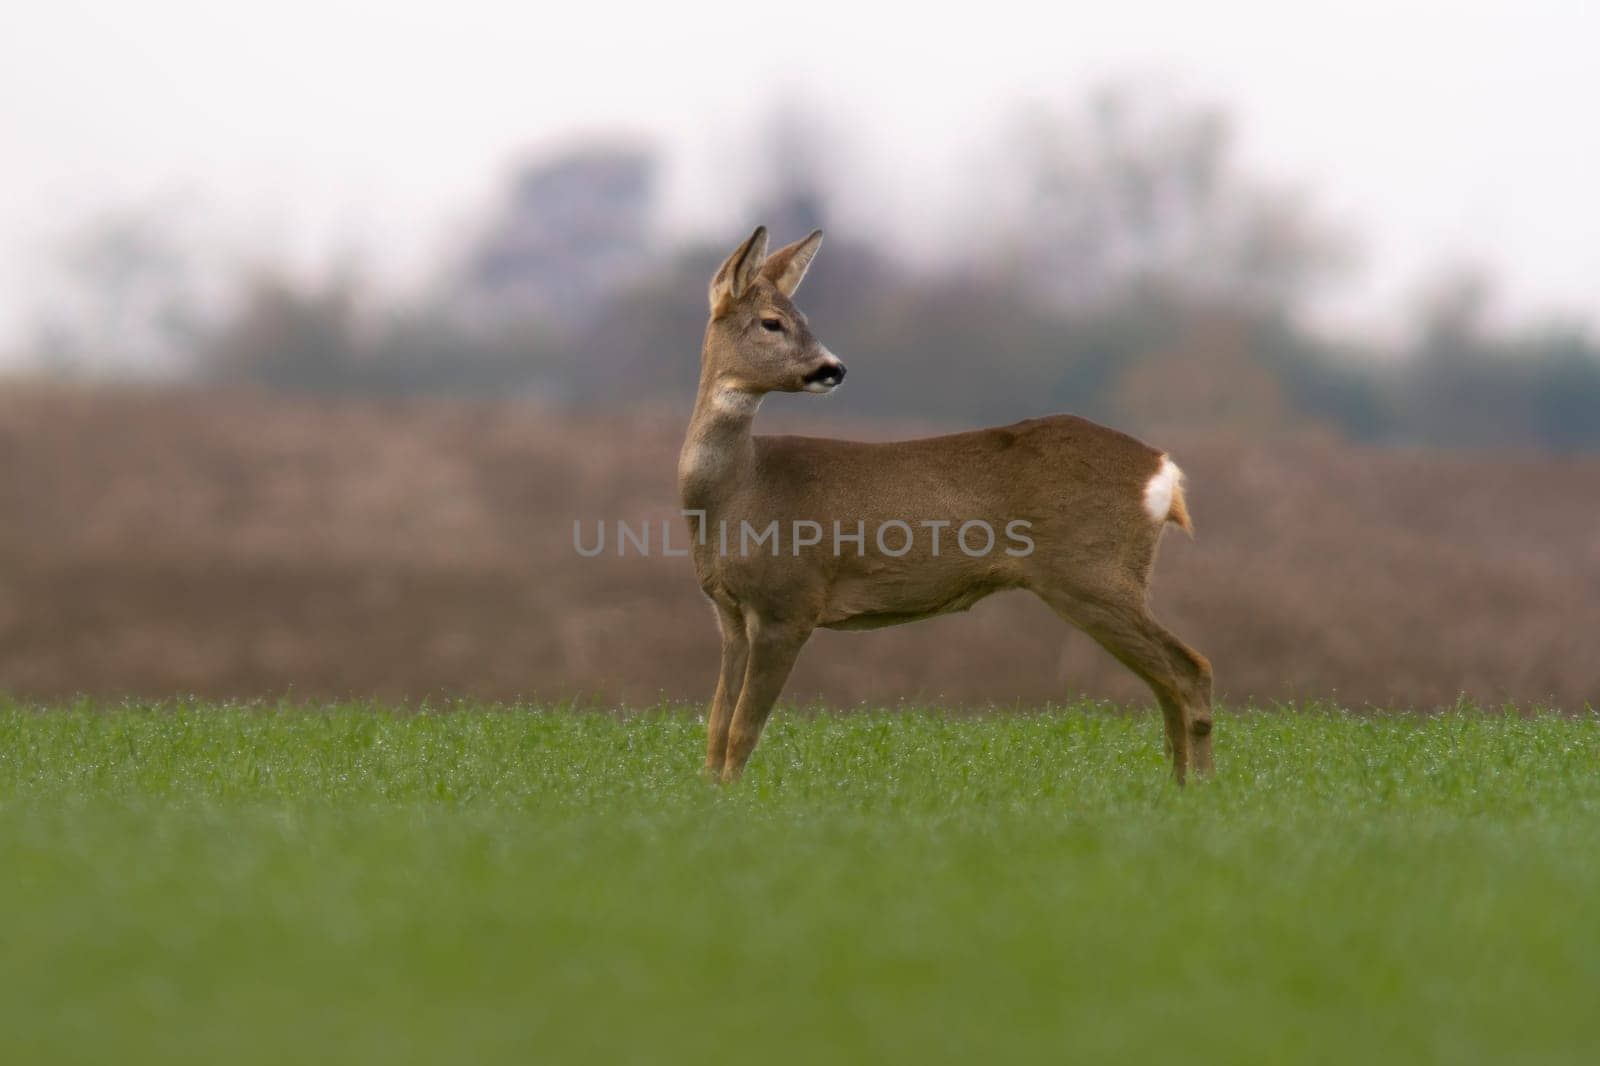 a beautiful doe doe standing on a green field in spring